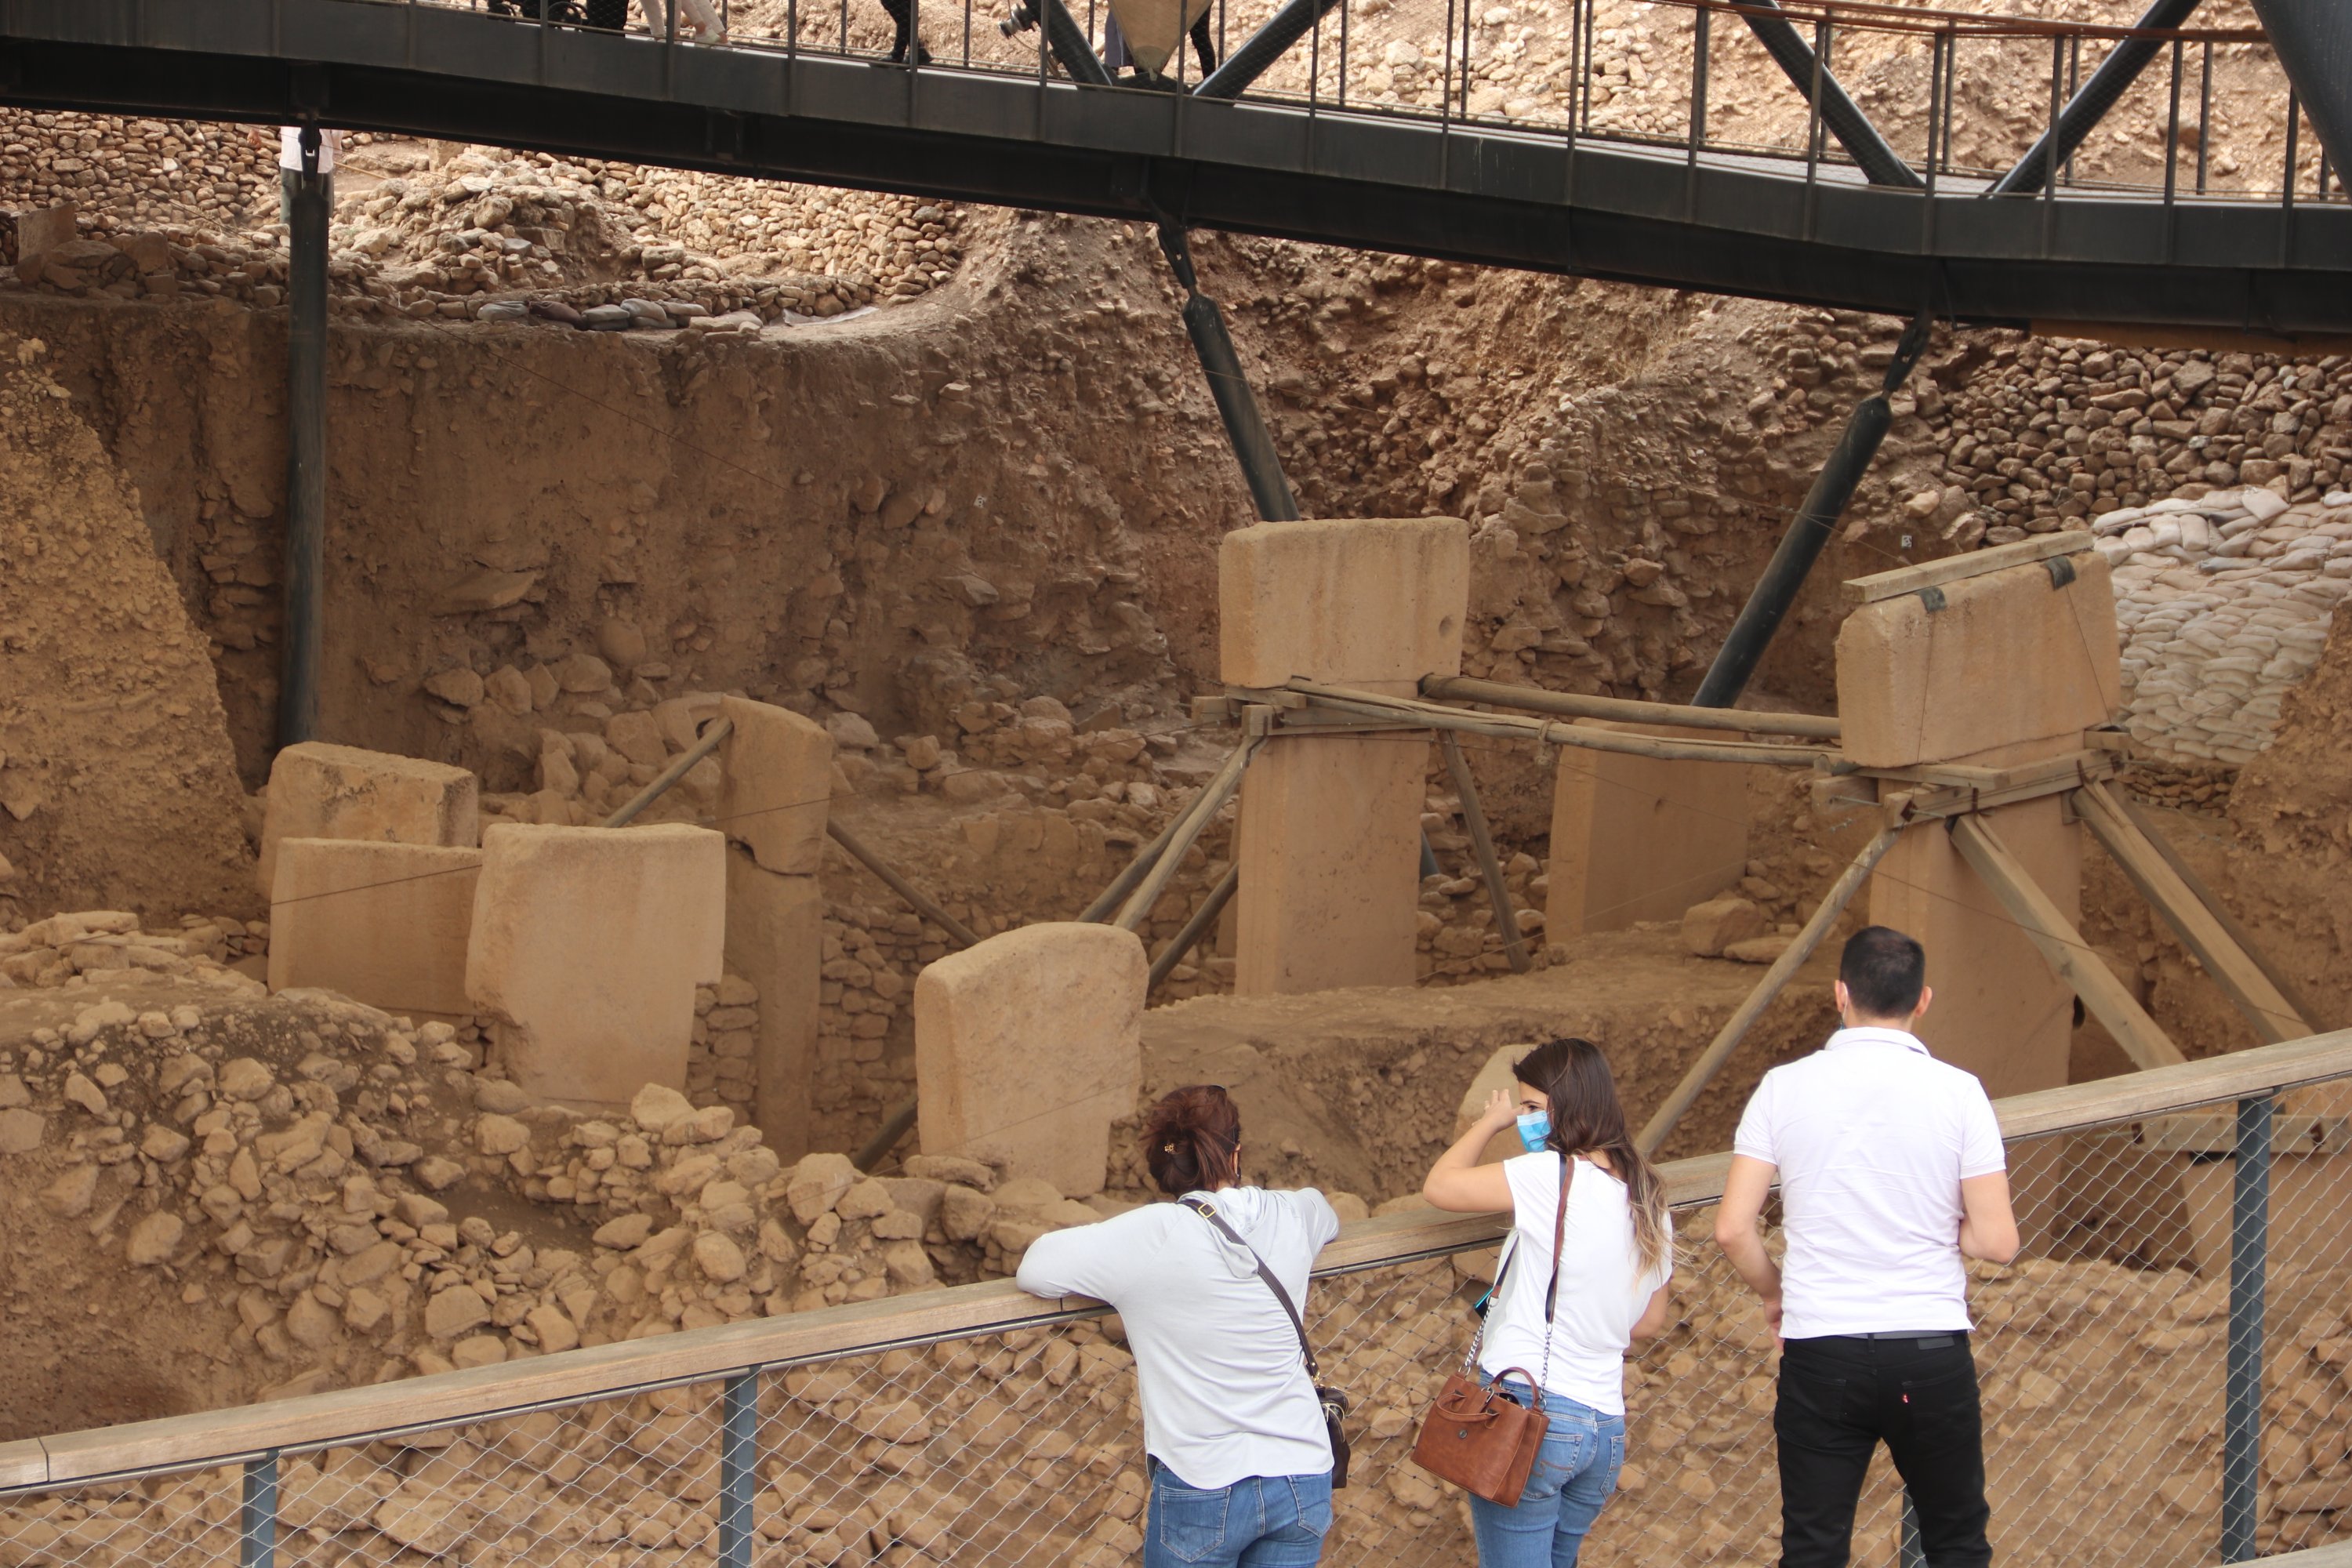 A general view of an excavation site is seen at Göbeklitepe in the southeastern province of Şanlıurfa, Turkey, Oct. 27, 2021. (Reuters Photo)